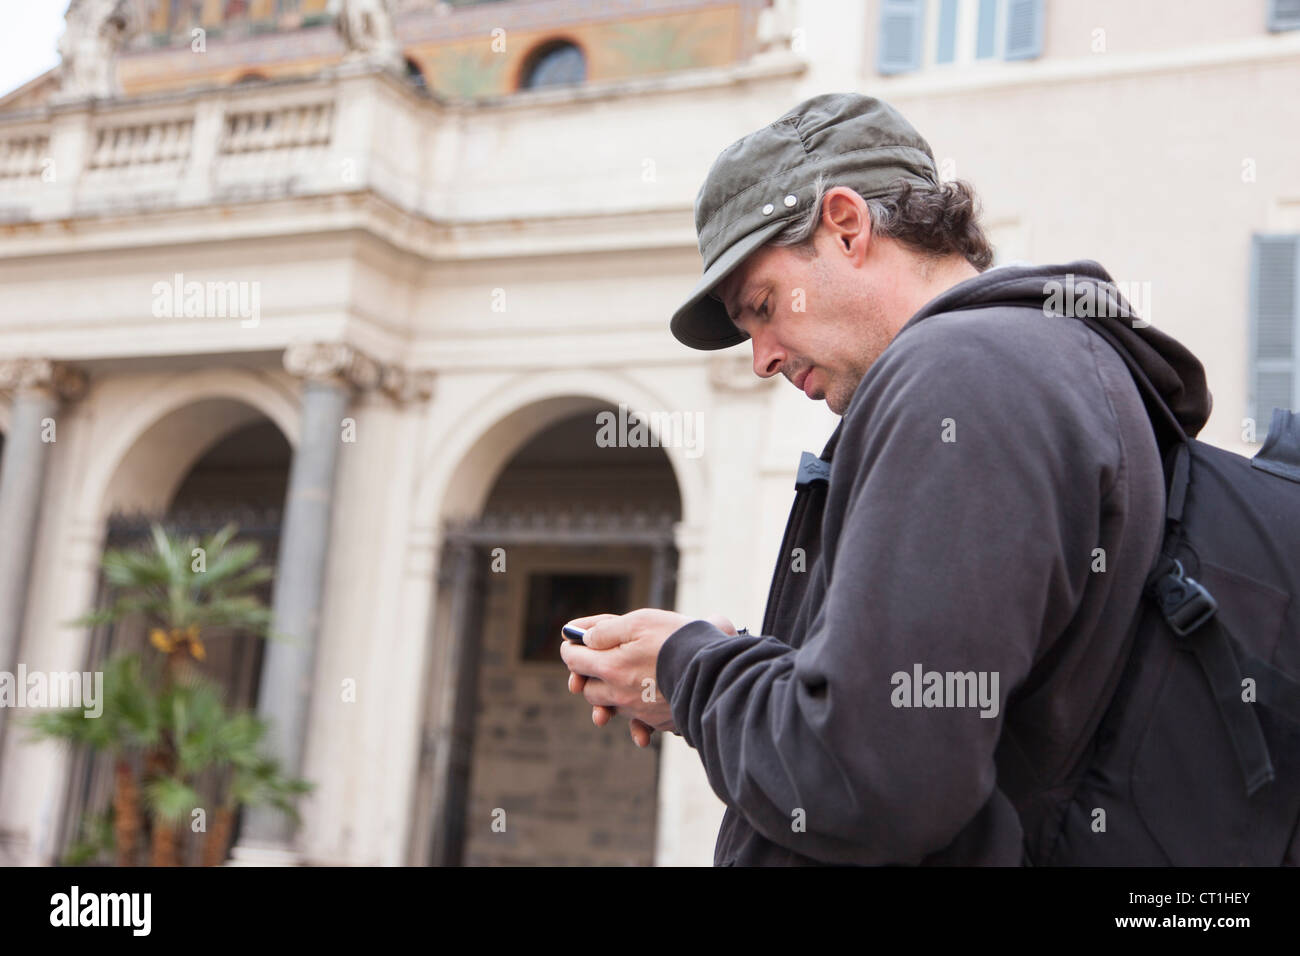 Man using cell phone on city street Stock Photo